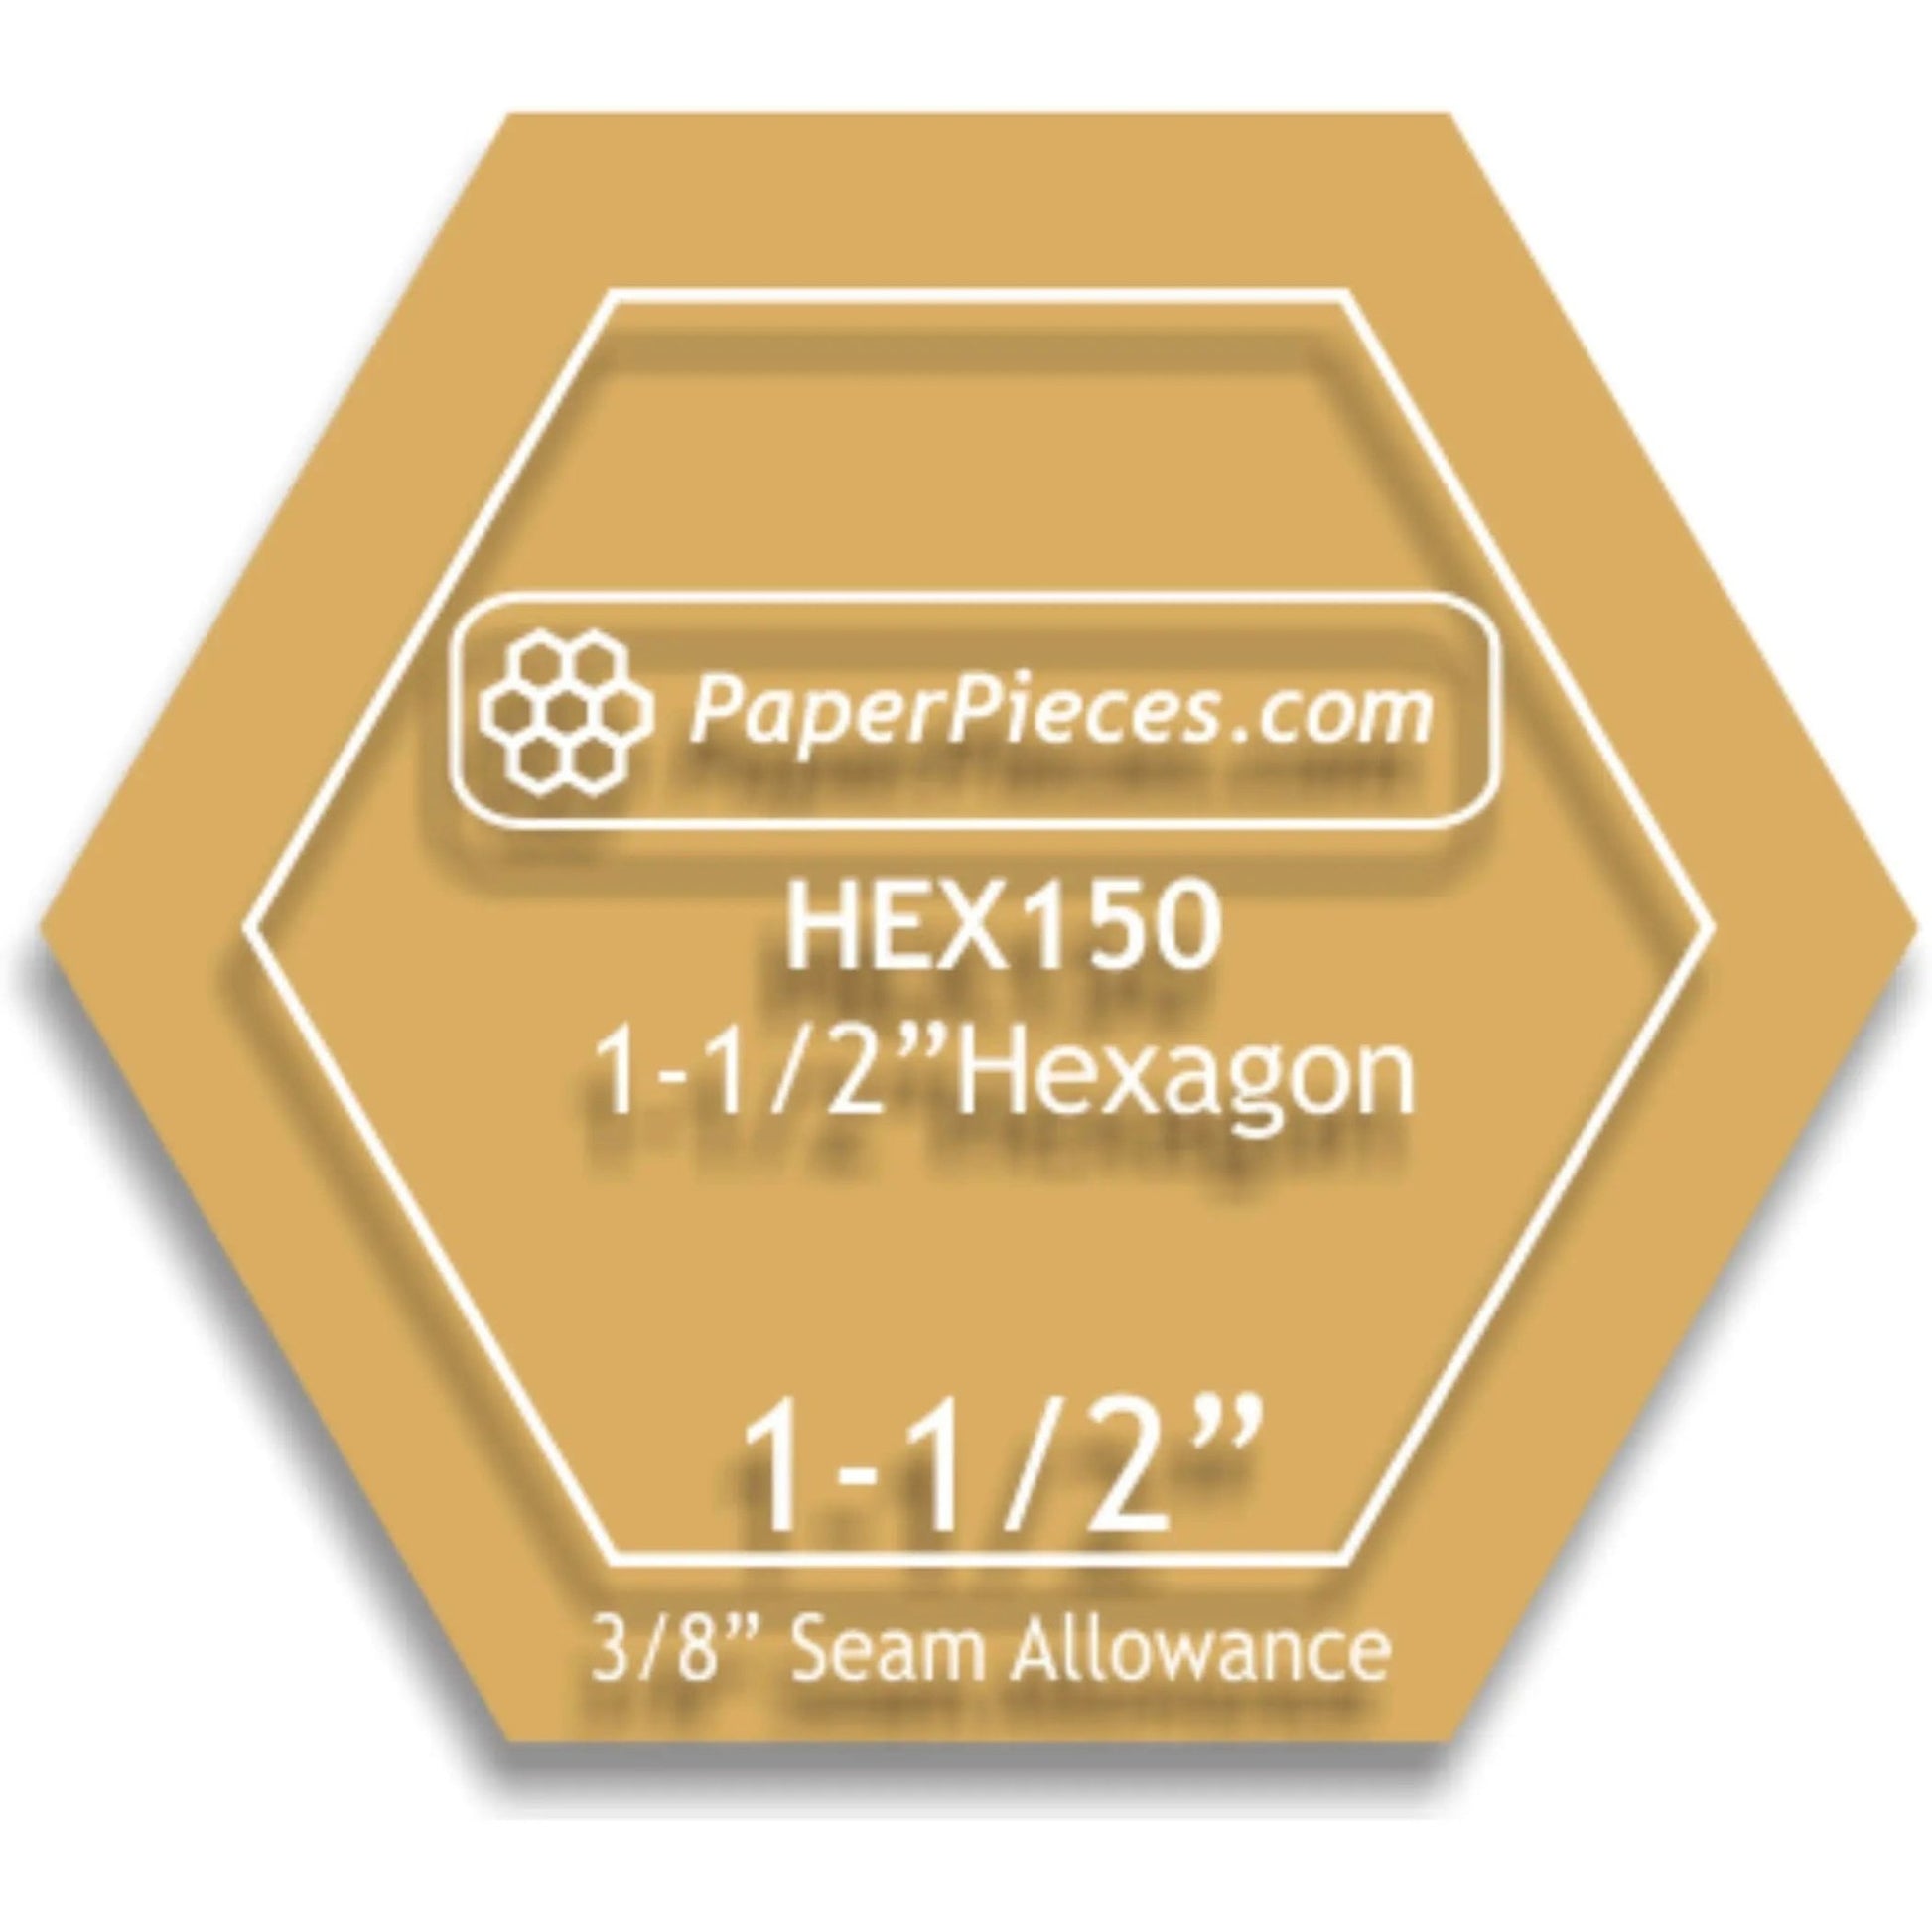 1 1/2" Hexagon acrylic template - Jammin Threads